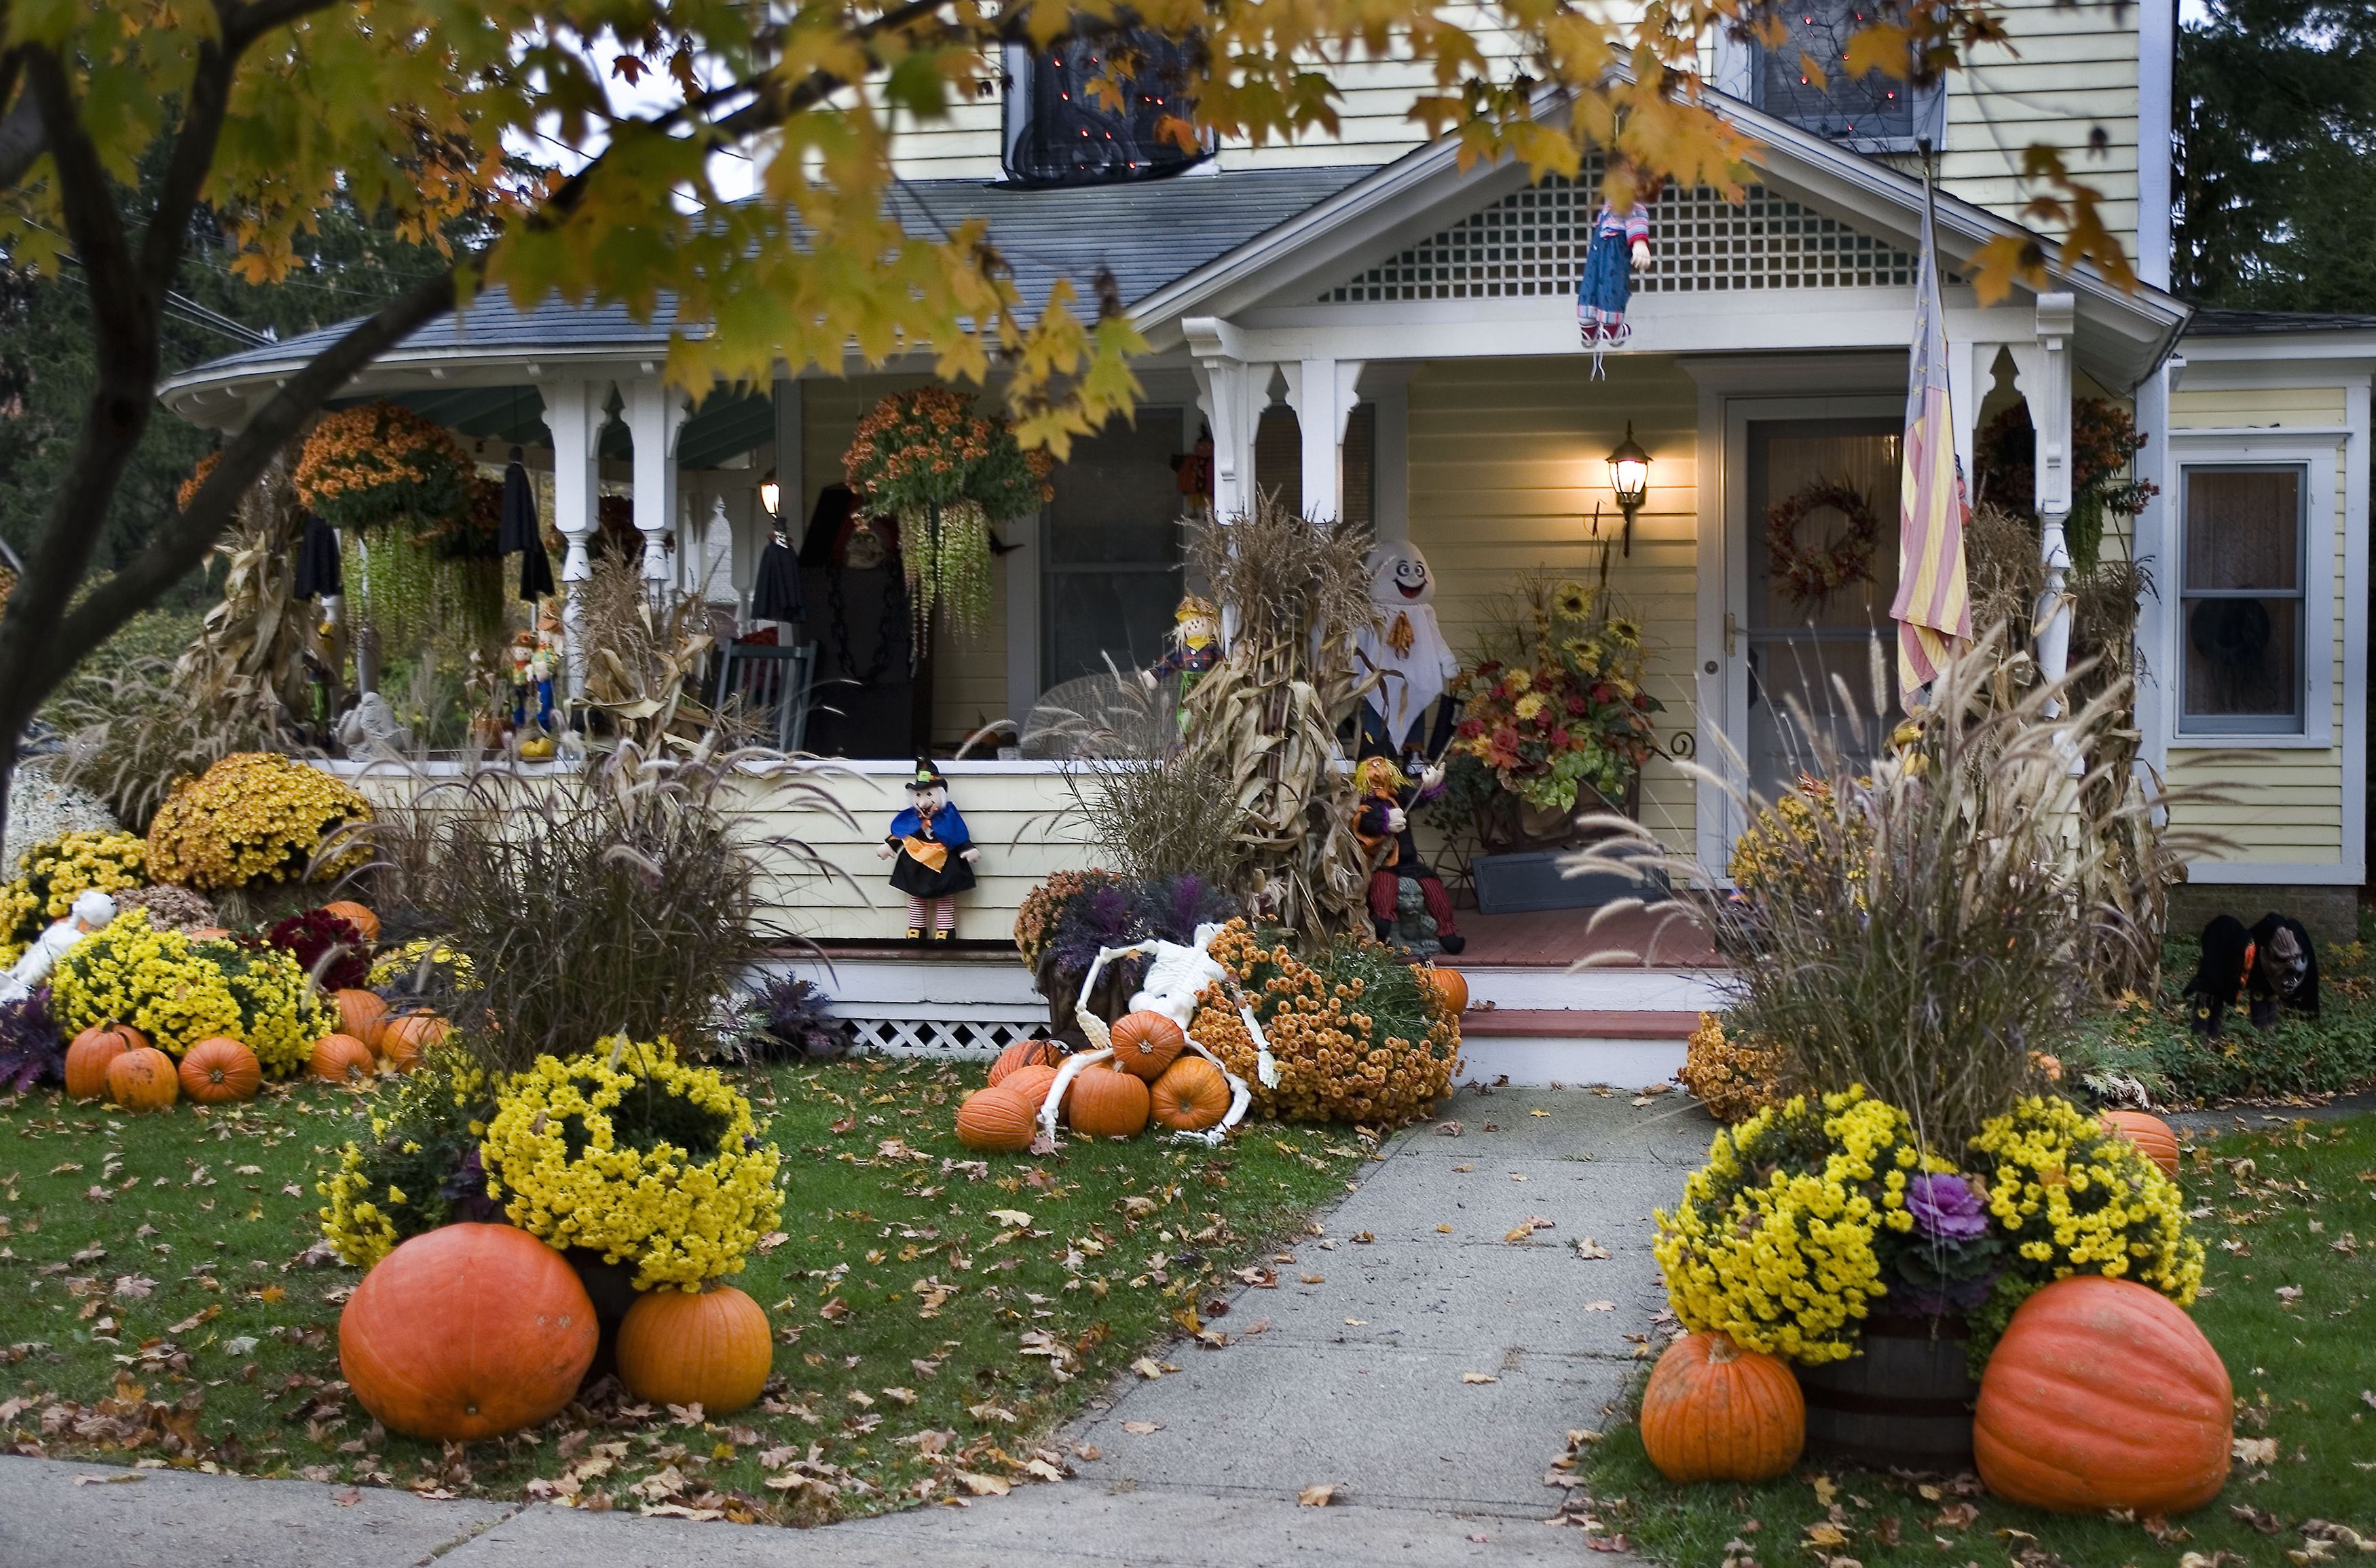 15 Spooky Outdoor Halloween Decoration Ideas - OutDoor Halloween Decorations Porch Decor IDeas For